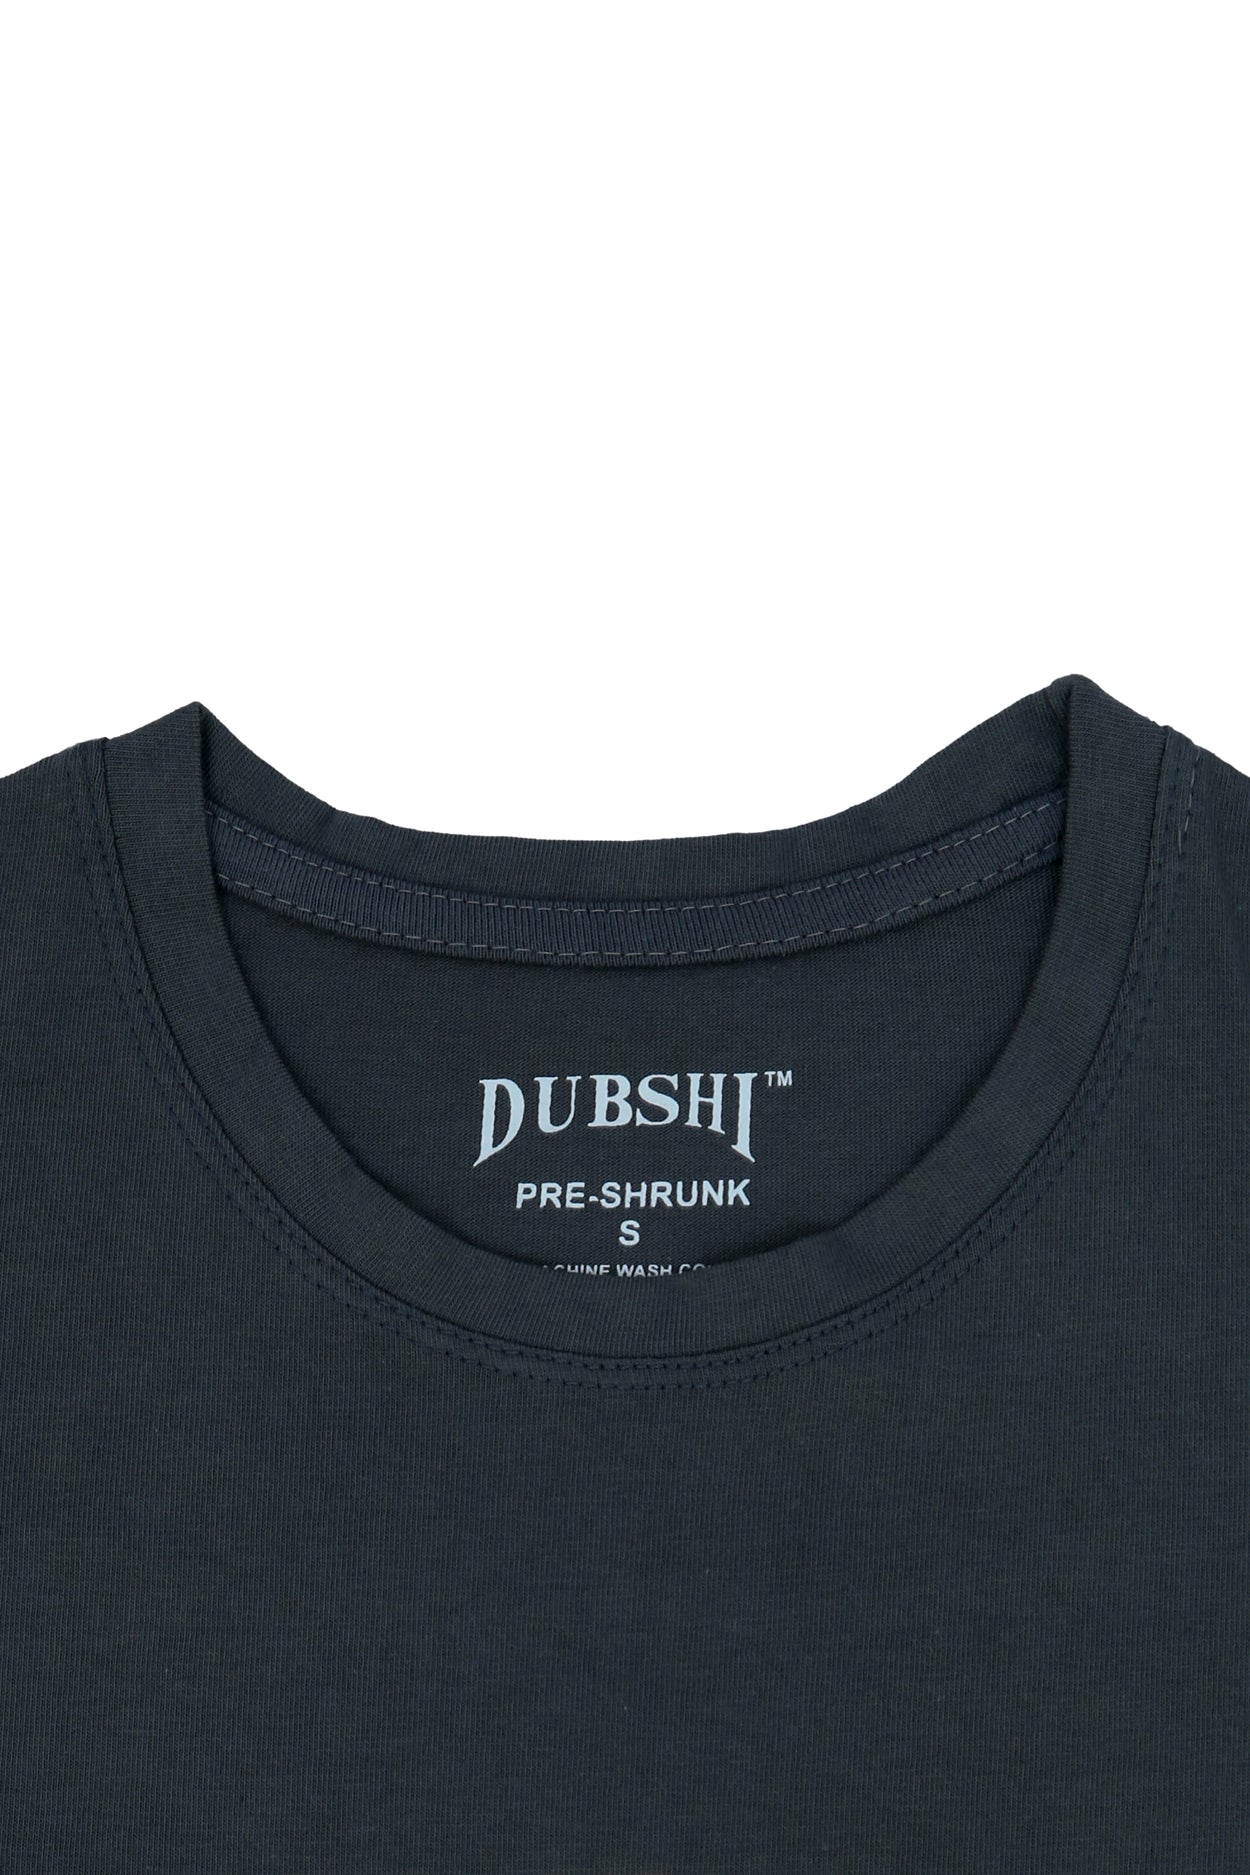 Unisex Casual T-Shirts (USA-31)